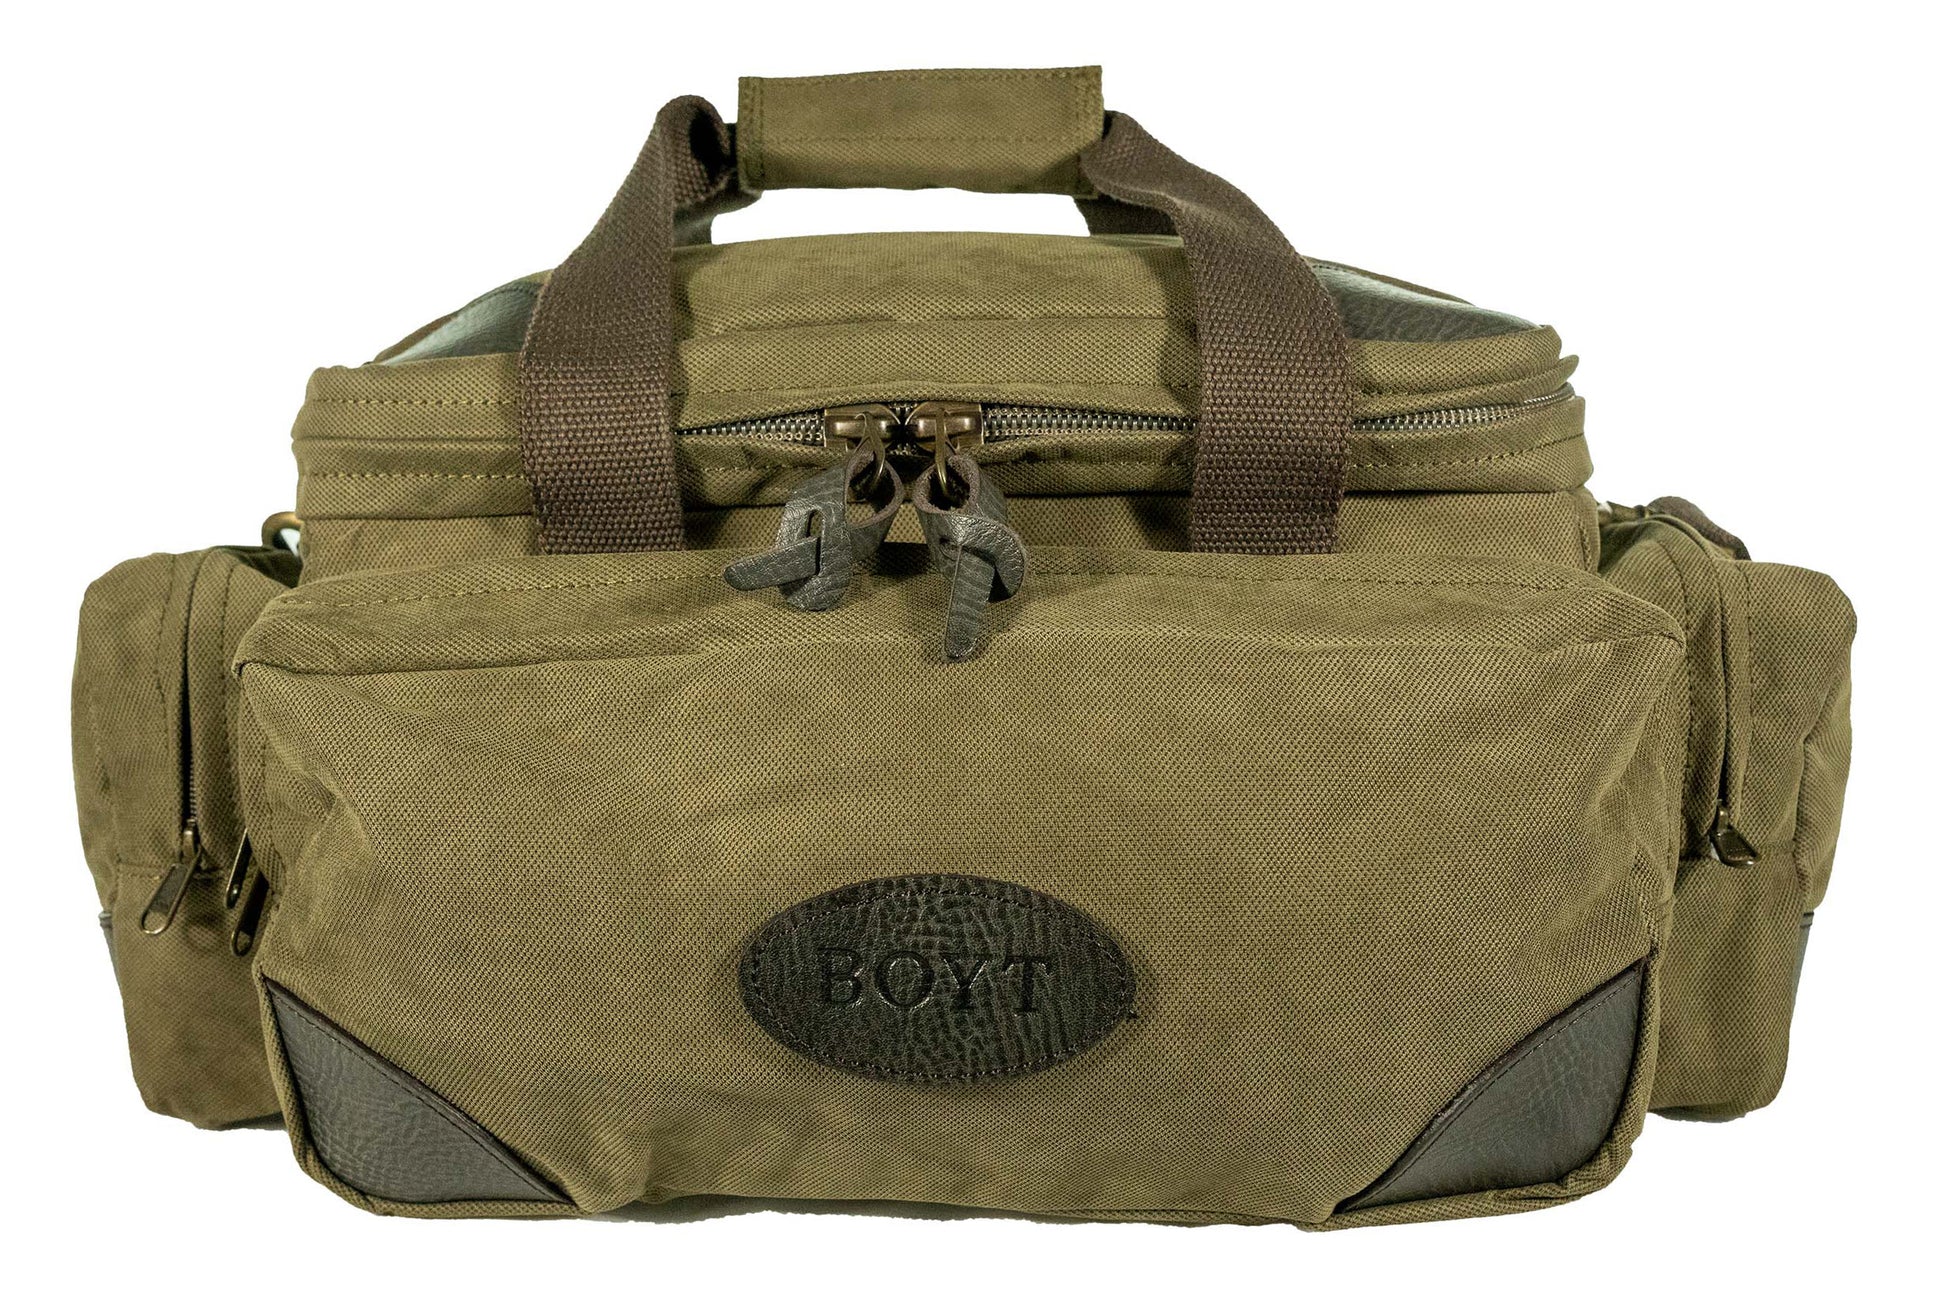 Boyt Harness Company Plantation Series Range Bag